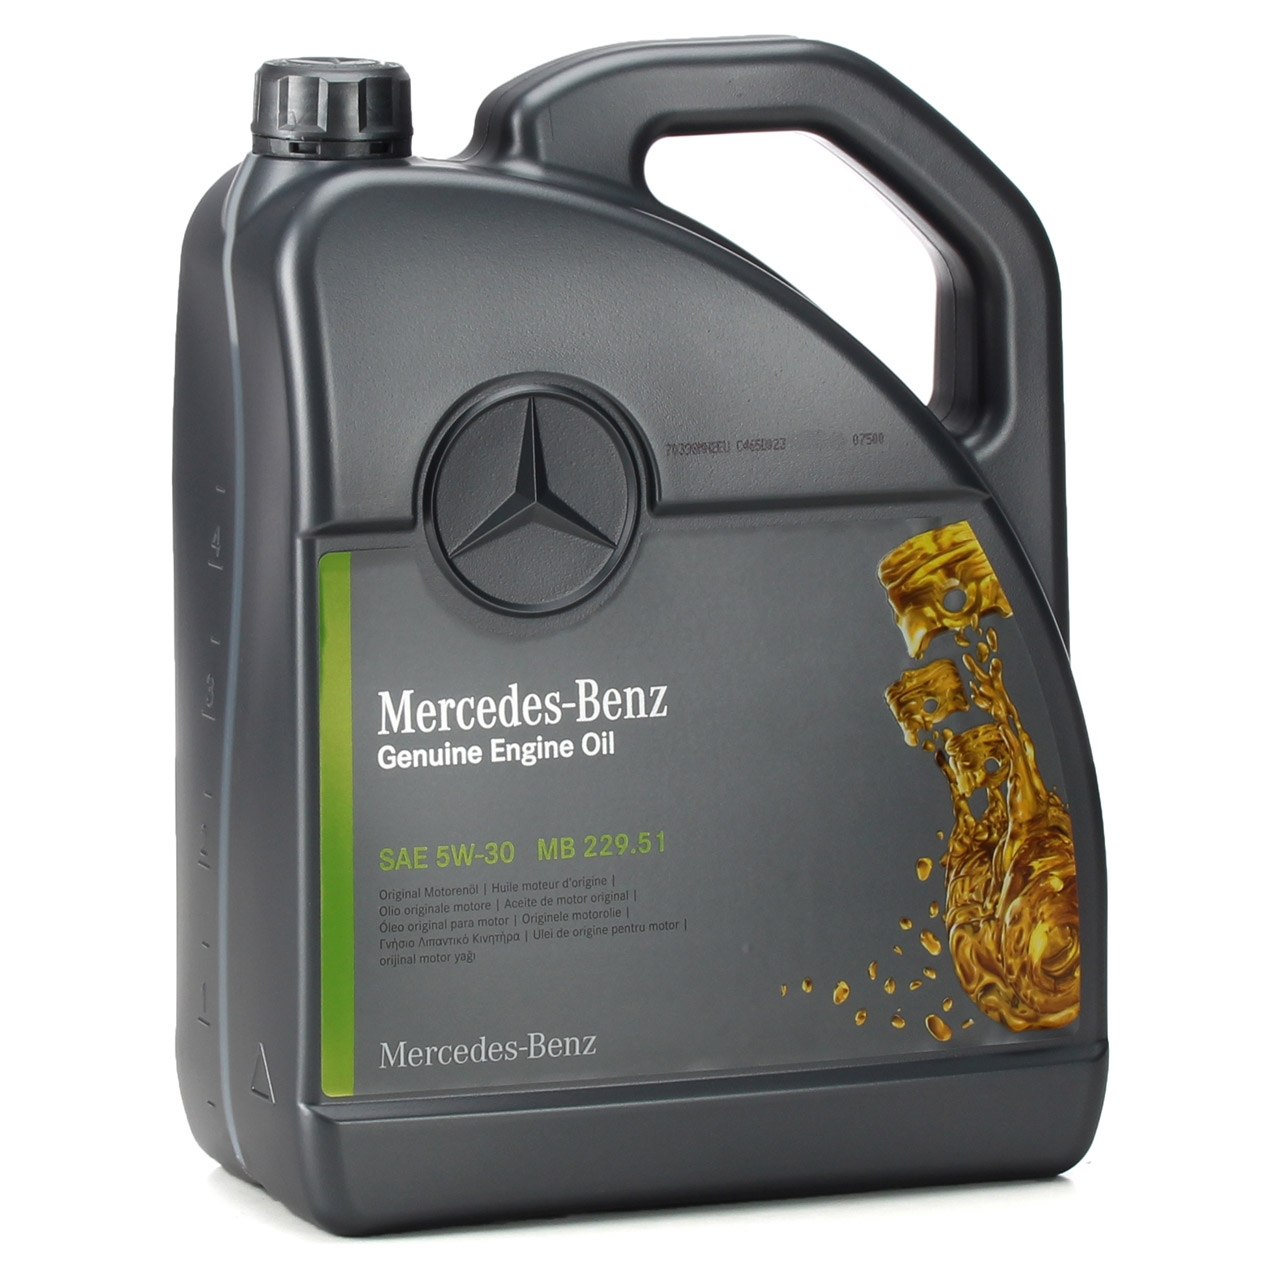 ORIGINAL Mercedes-Benz ÖL Motoröl 5W-30 MB 229.51 5L 5 Liter 0009899701BRD4